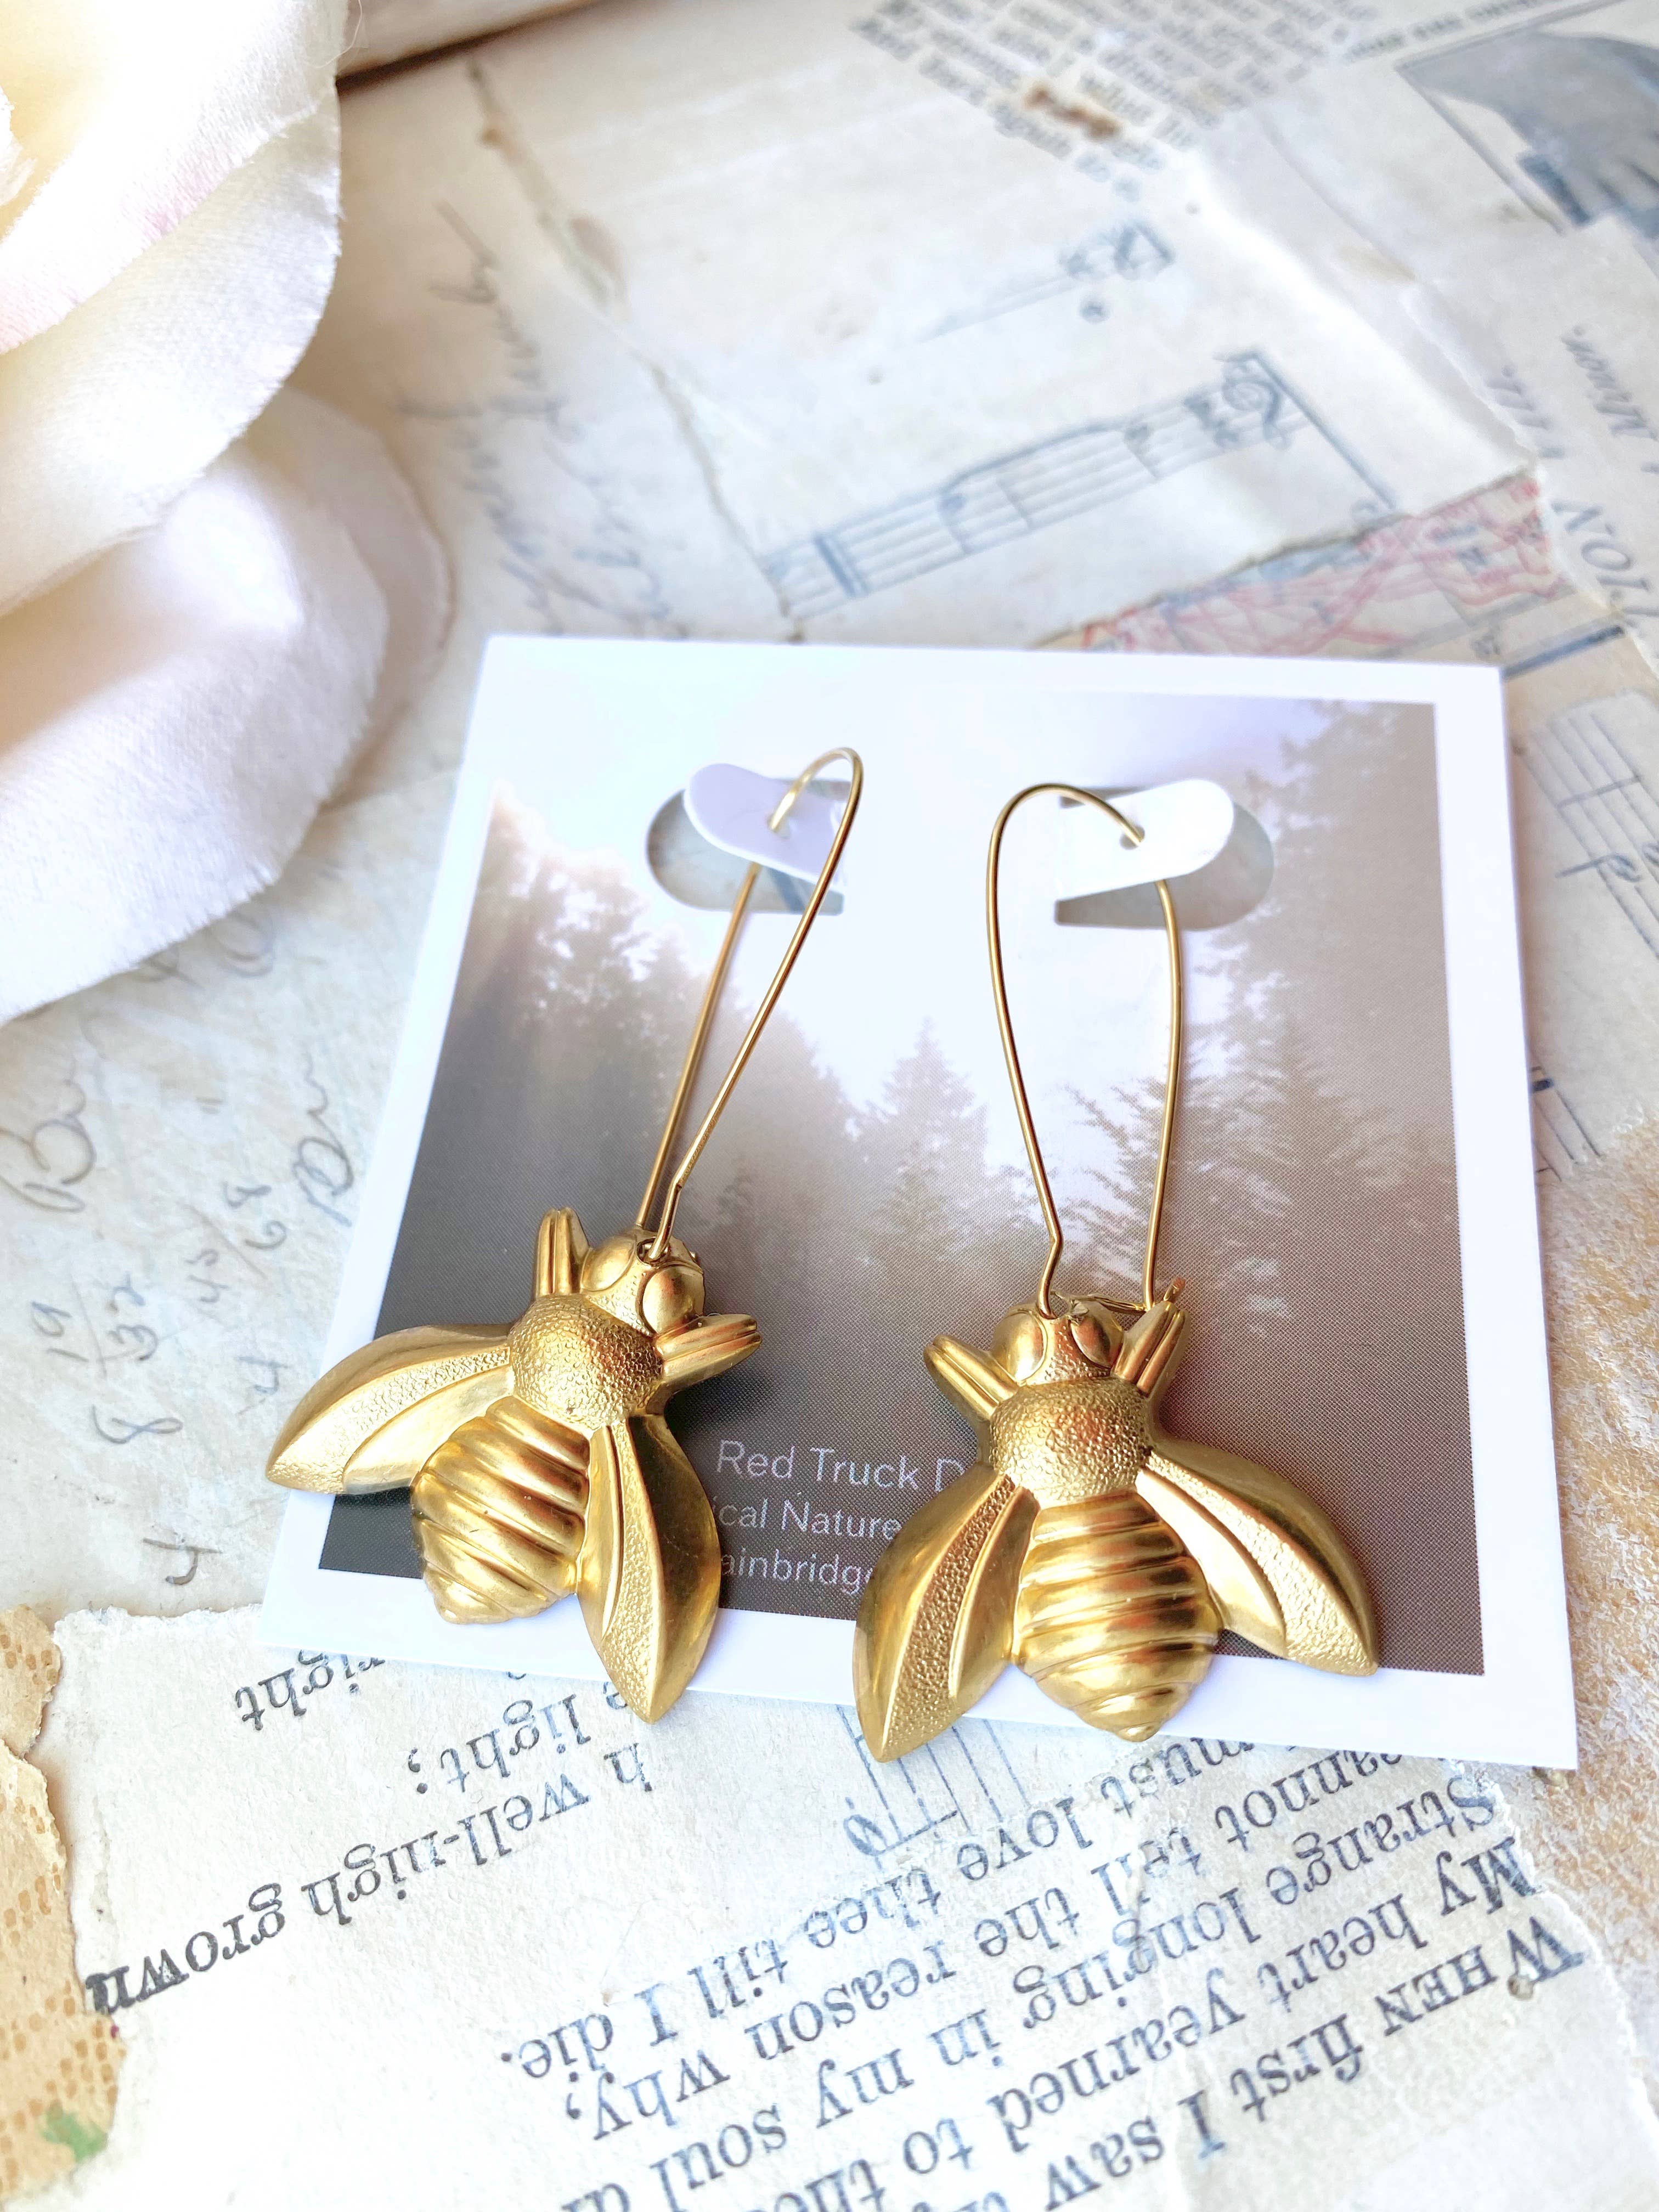 Gold Hand Pearl Earrings Whimsical Bohemian Victorian Gentlewoman Earrings